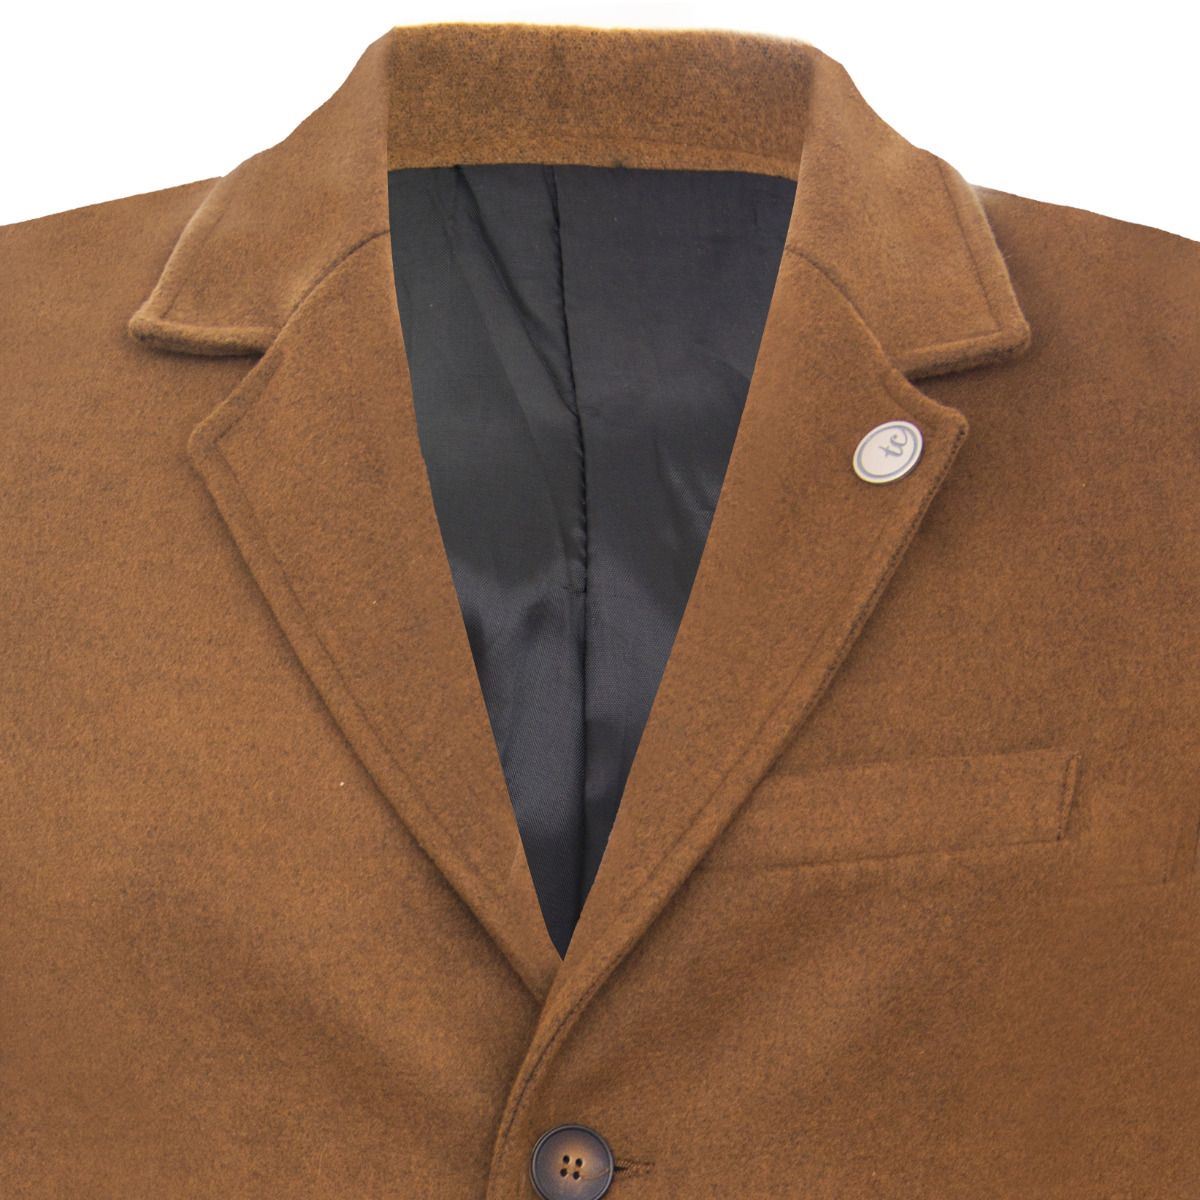 Men's Long Brown Wool Slim Fit Overcoat